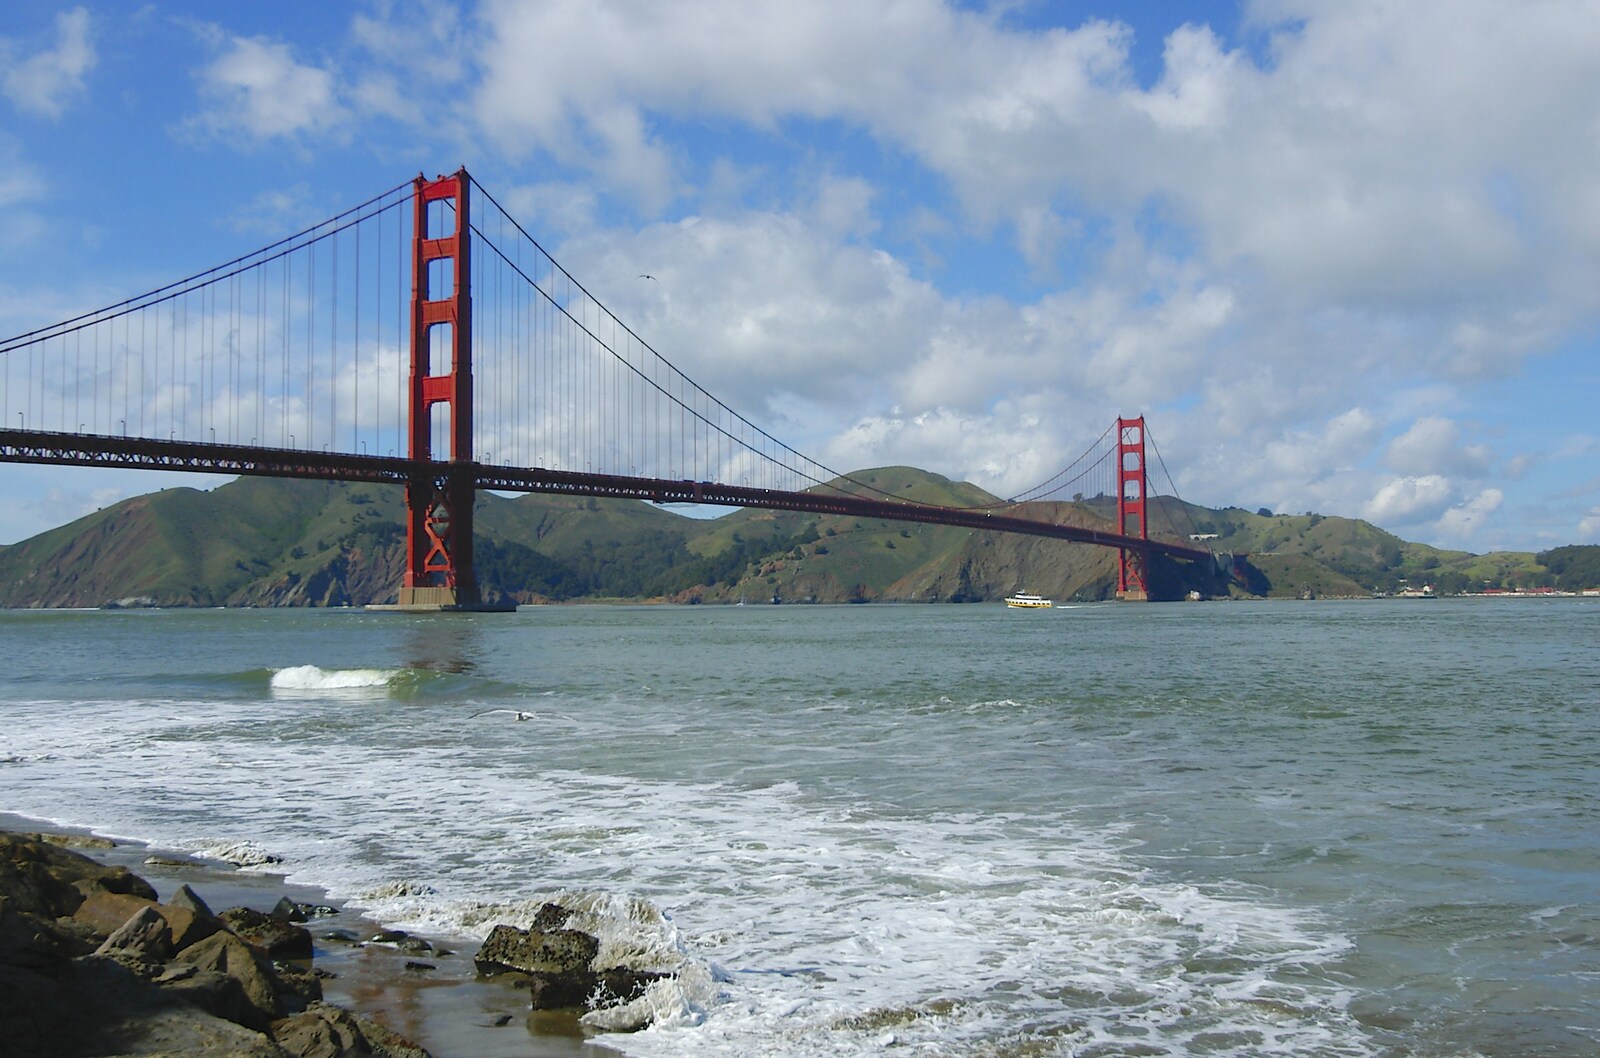 Golden Gate bridge from The Golden Gate Bridge, San Francisco, California, US - 11th March 2006